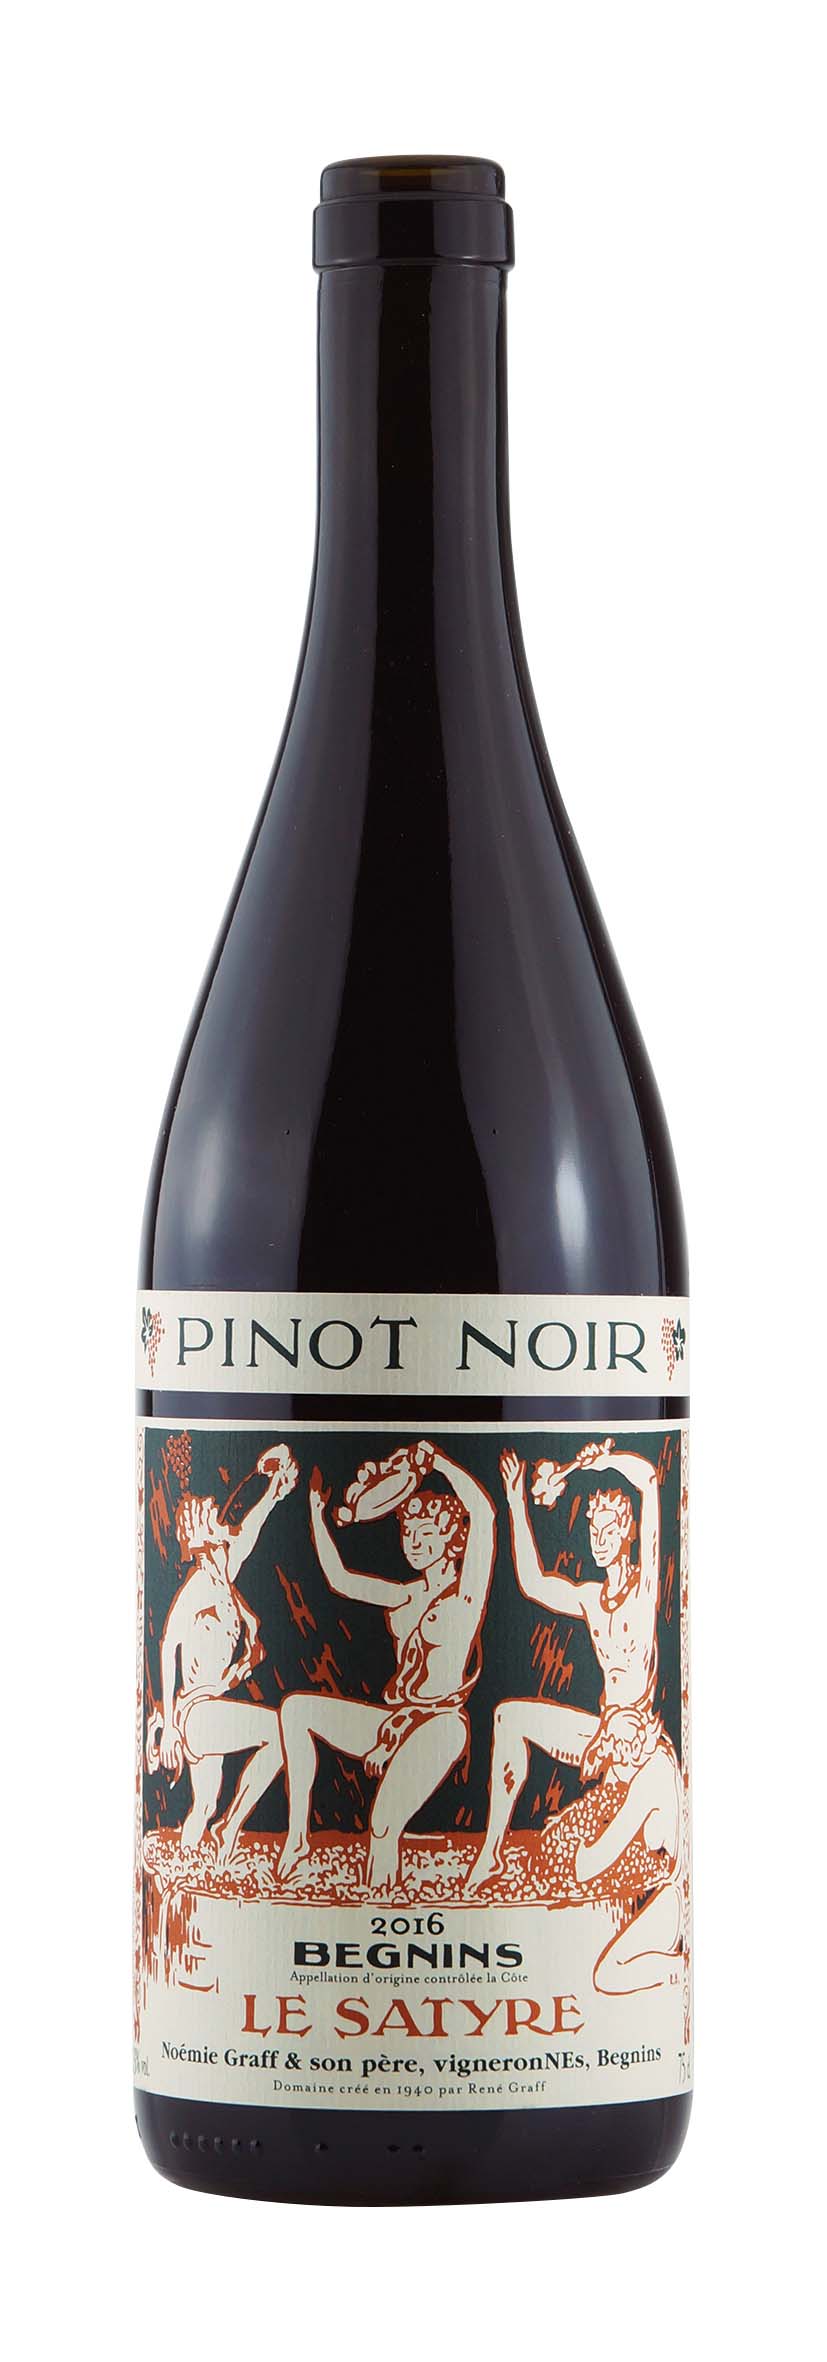 La Côte AOC Begnins Pinot Noir 2016